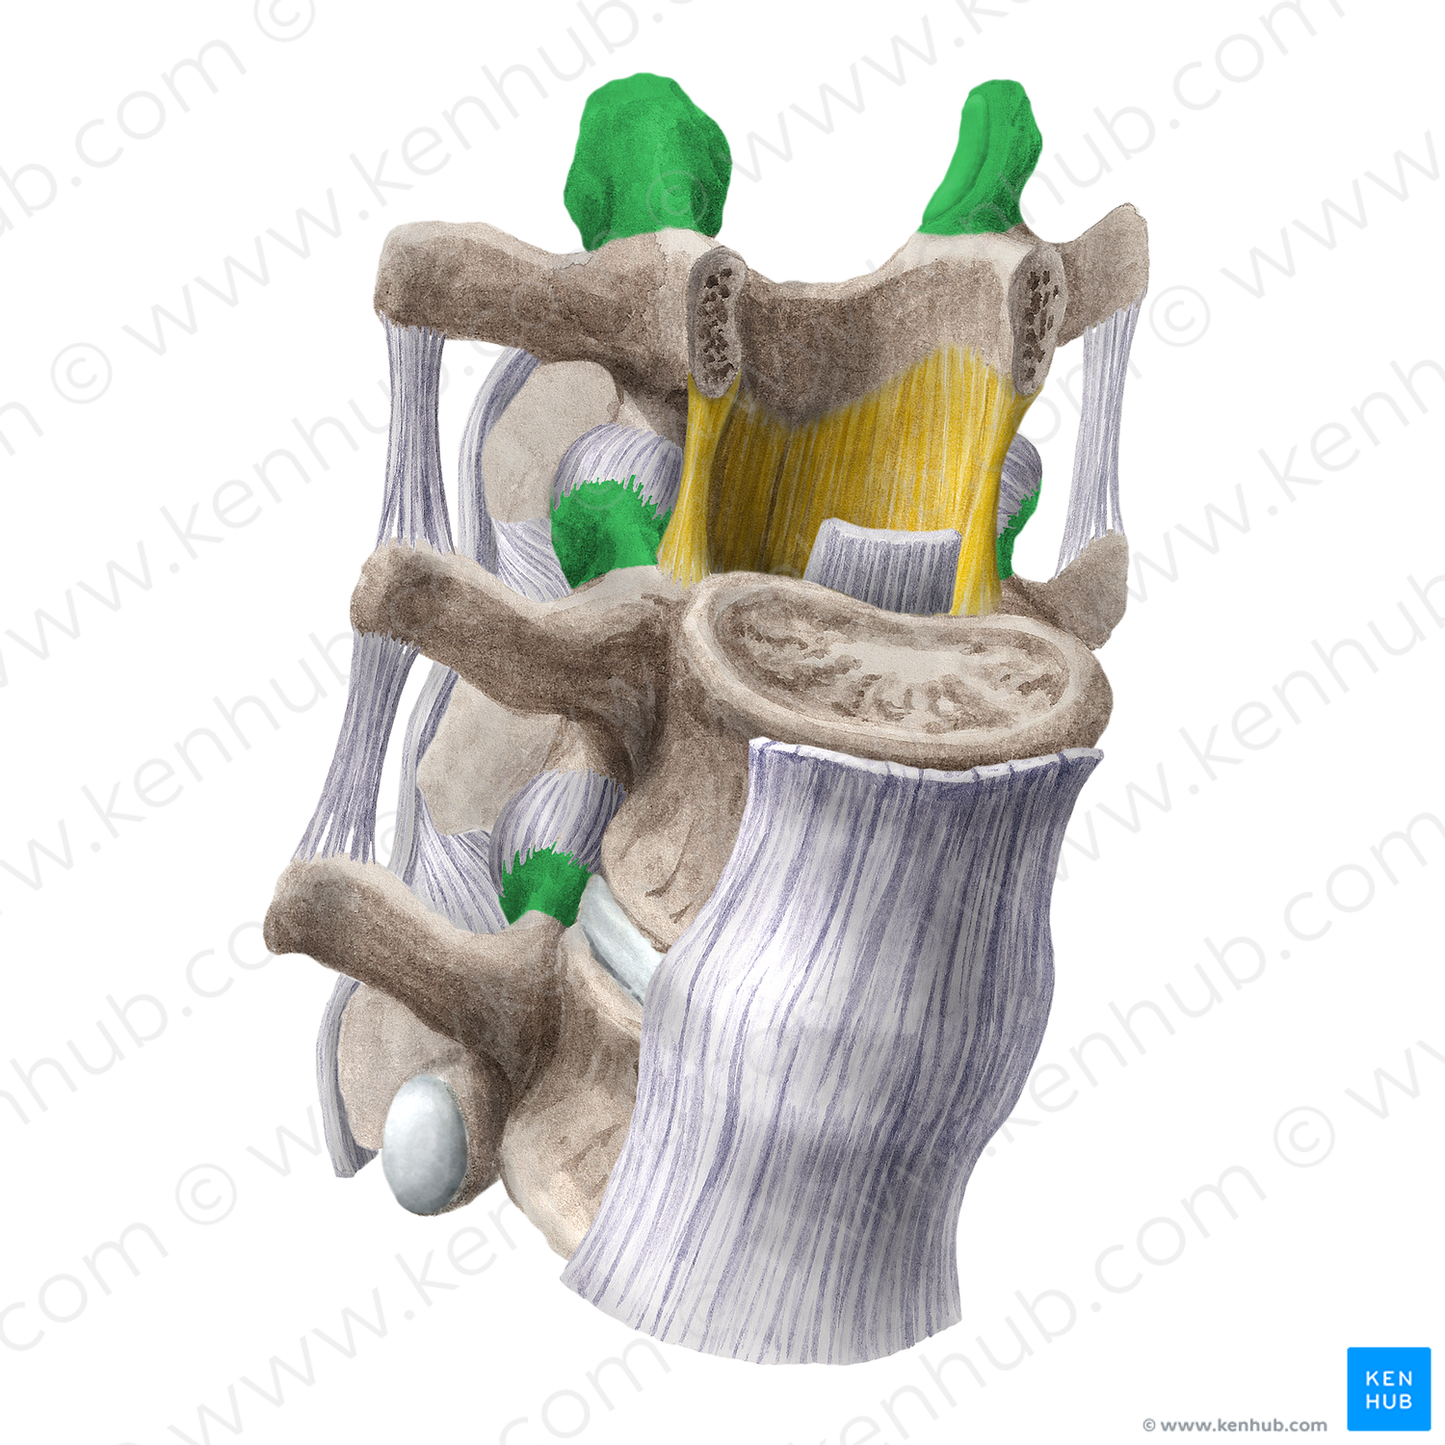 Superior articular process of vertebra (#20199)